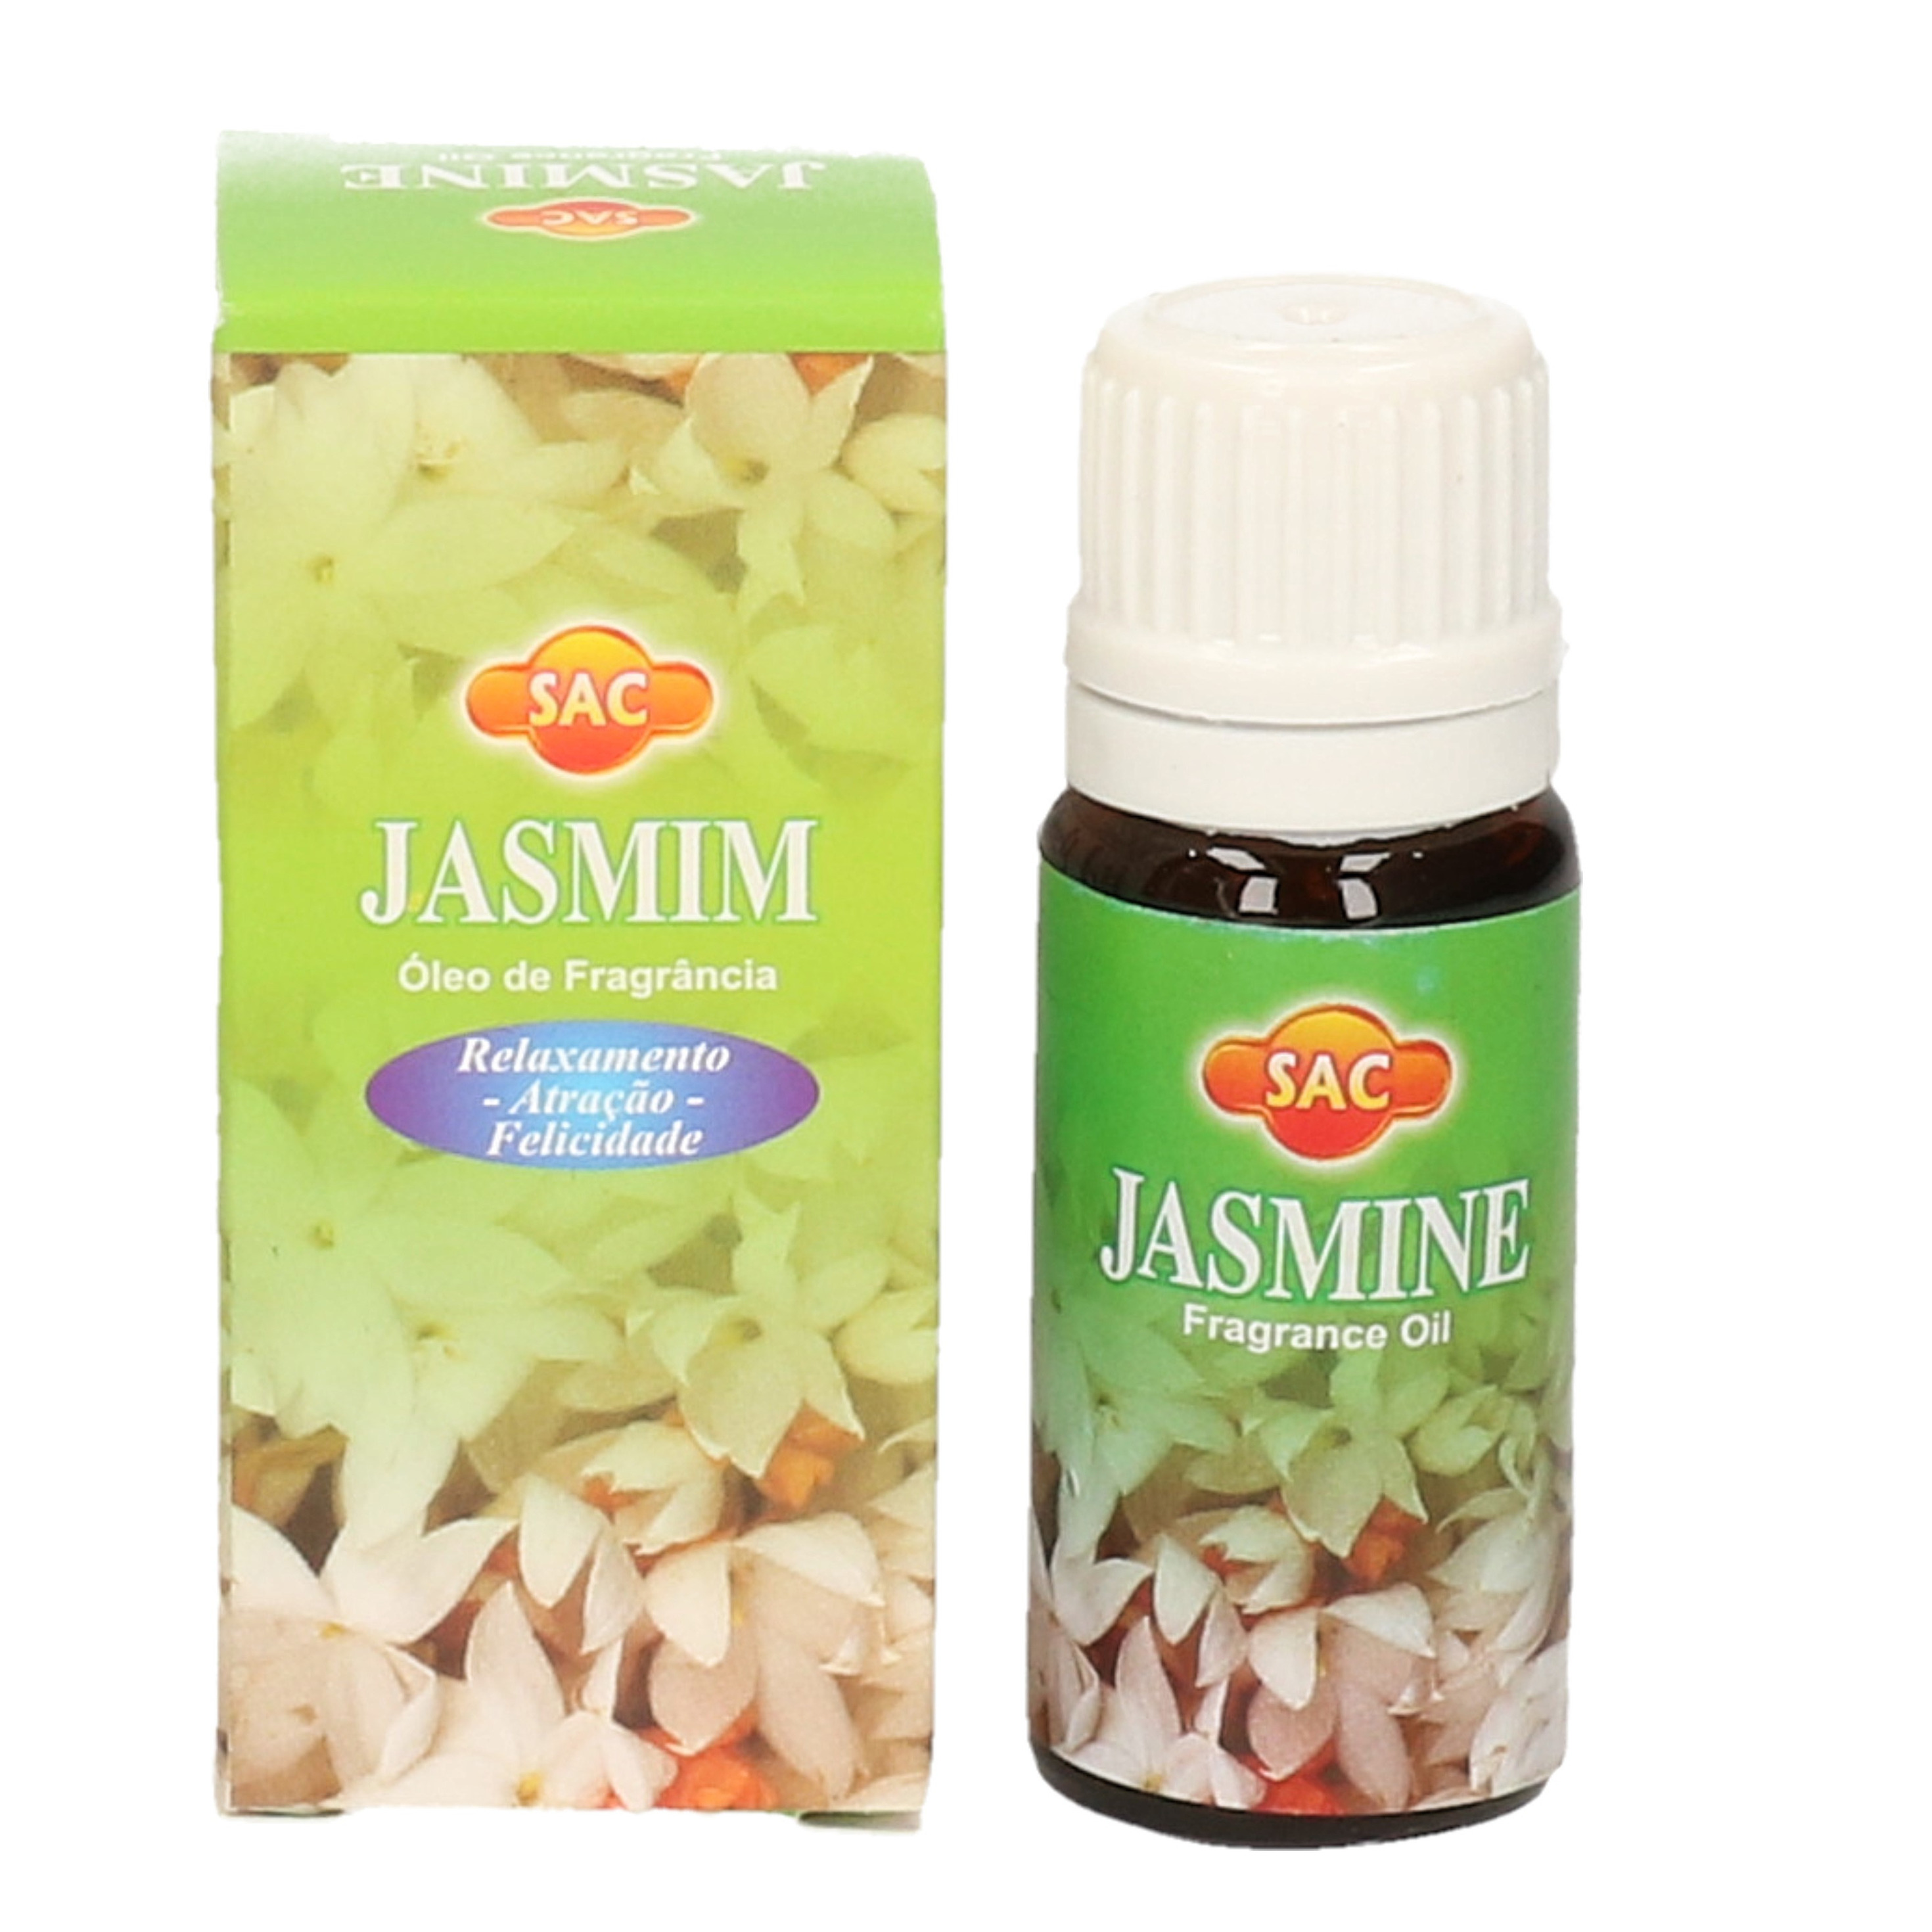 Geurolie jasmijn 10 ml flesje